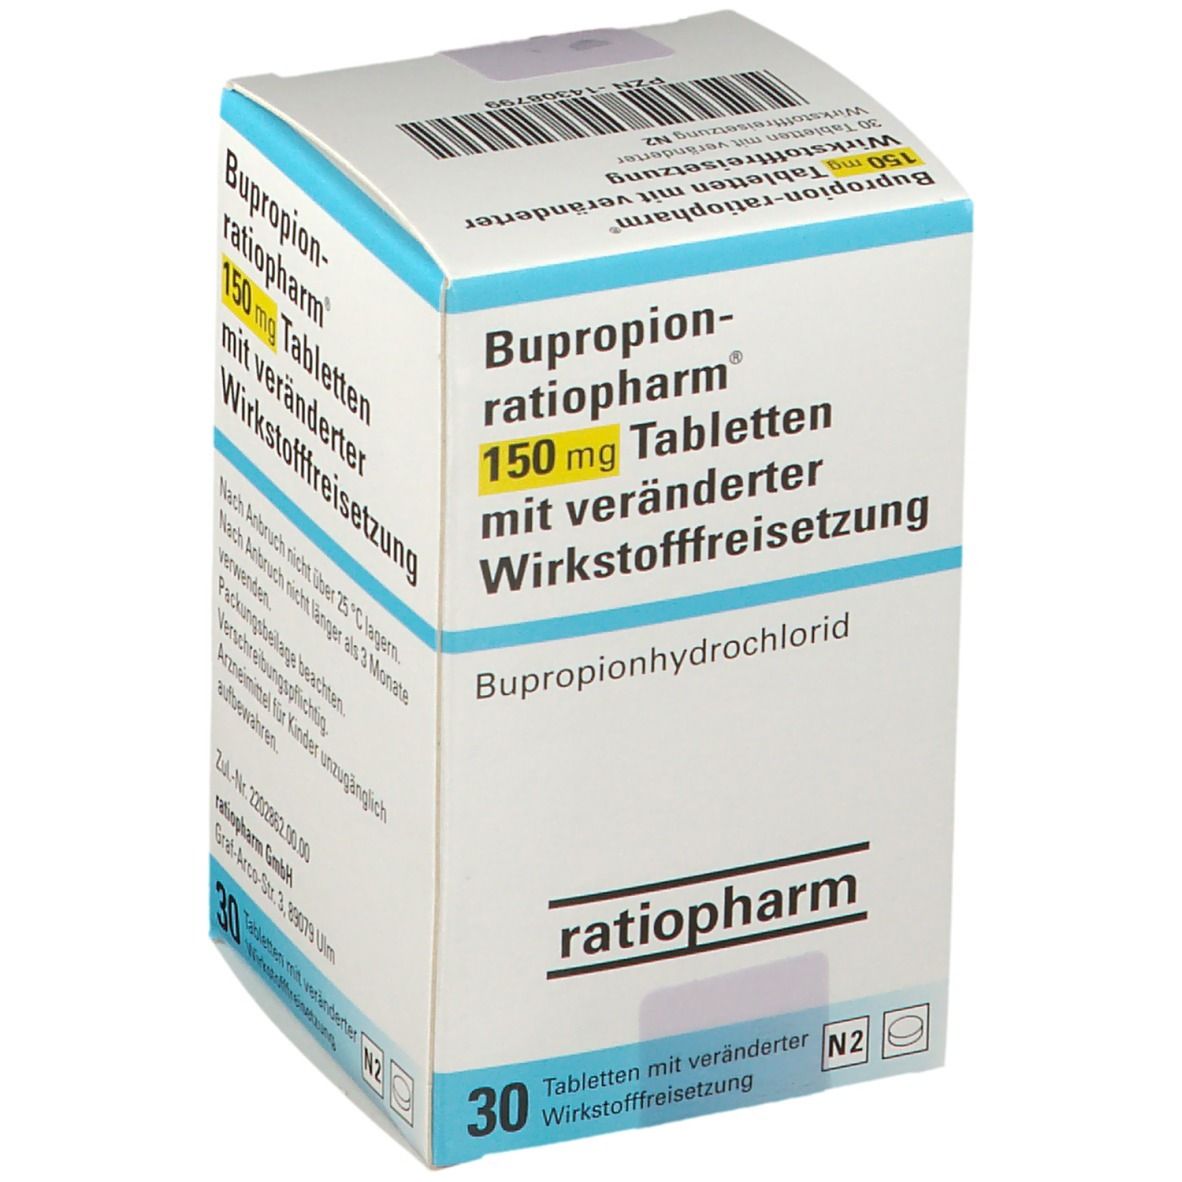 Bupropion-ratiopharm® 150 mg